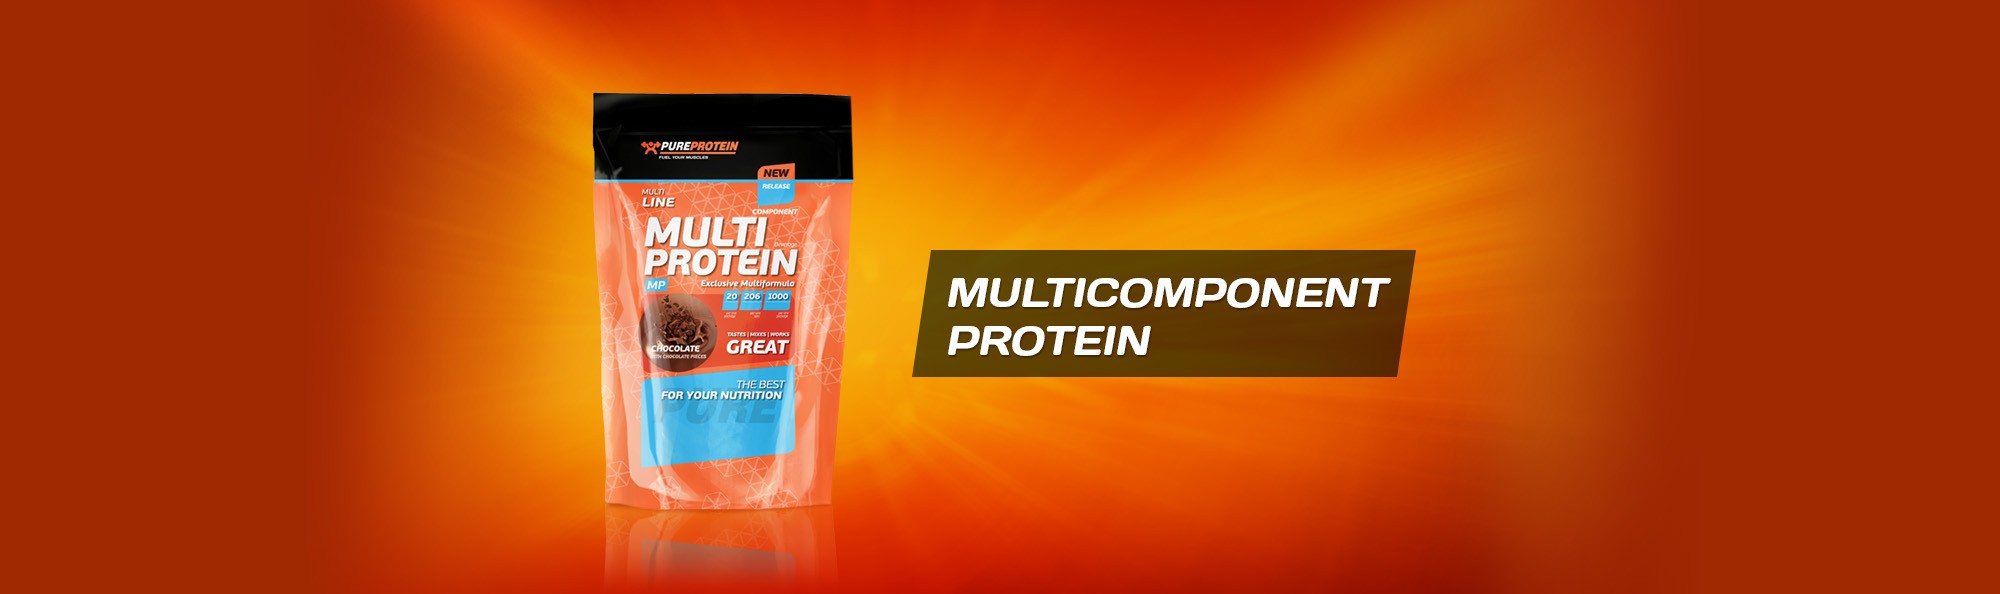 Комплексный протеин Multicomponent Protein Multi Line от Pure Protein